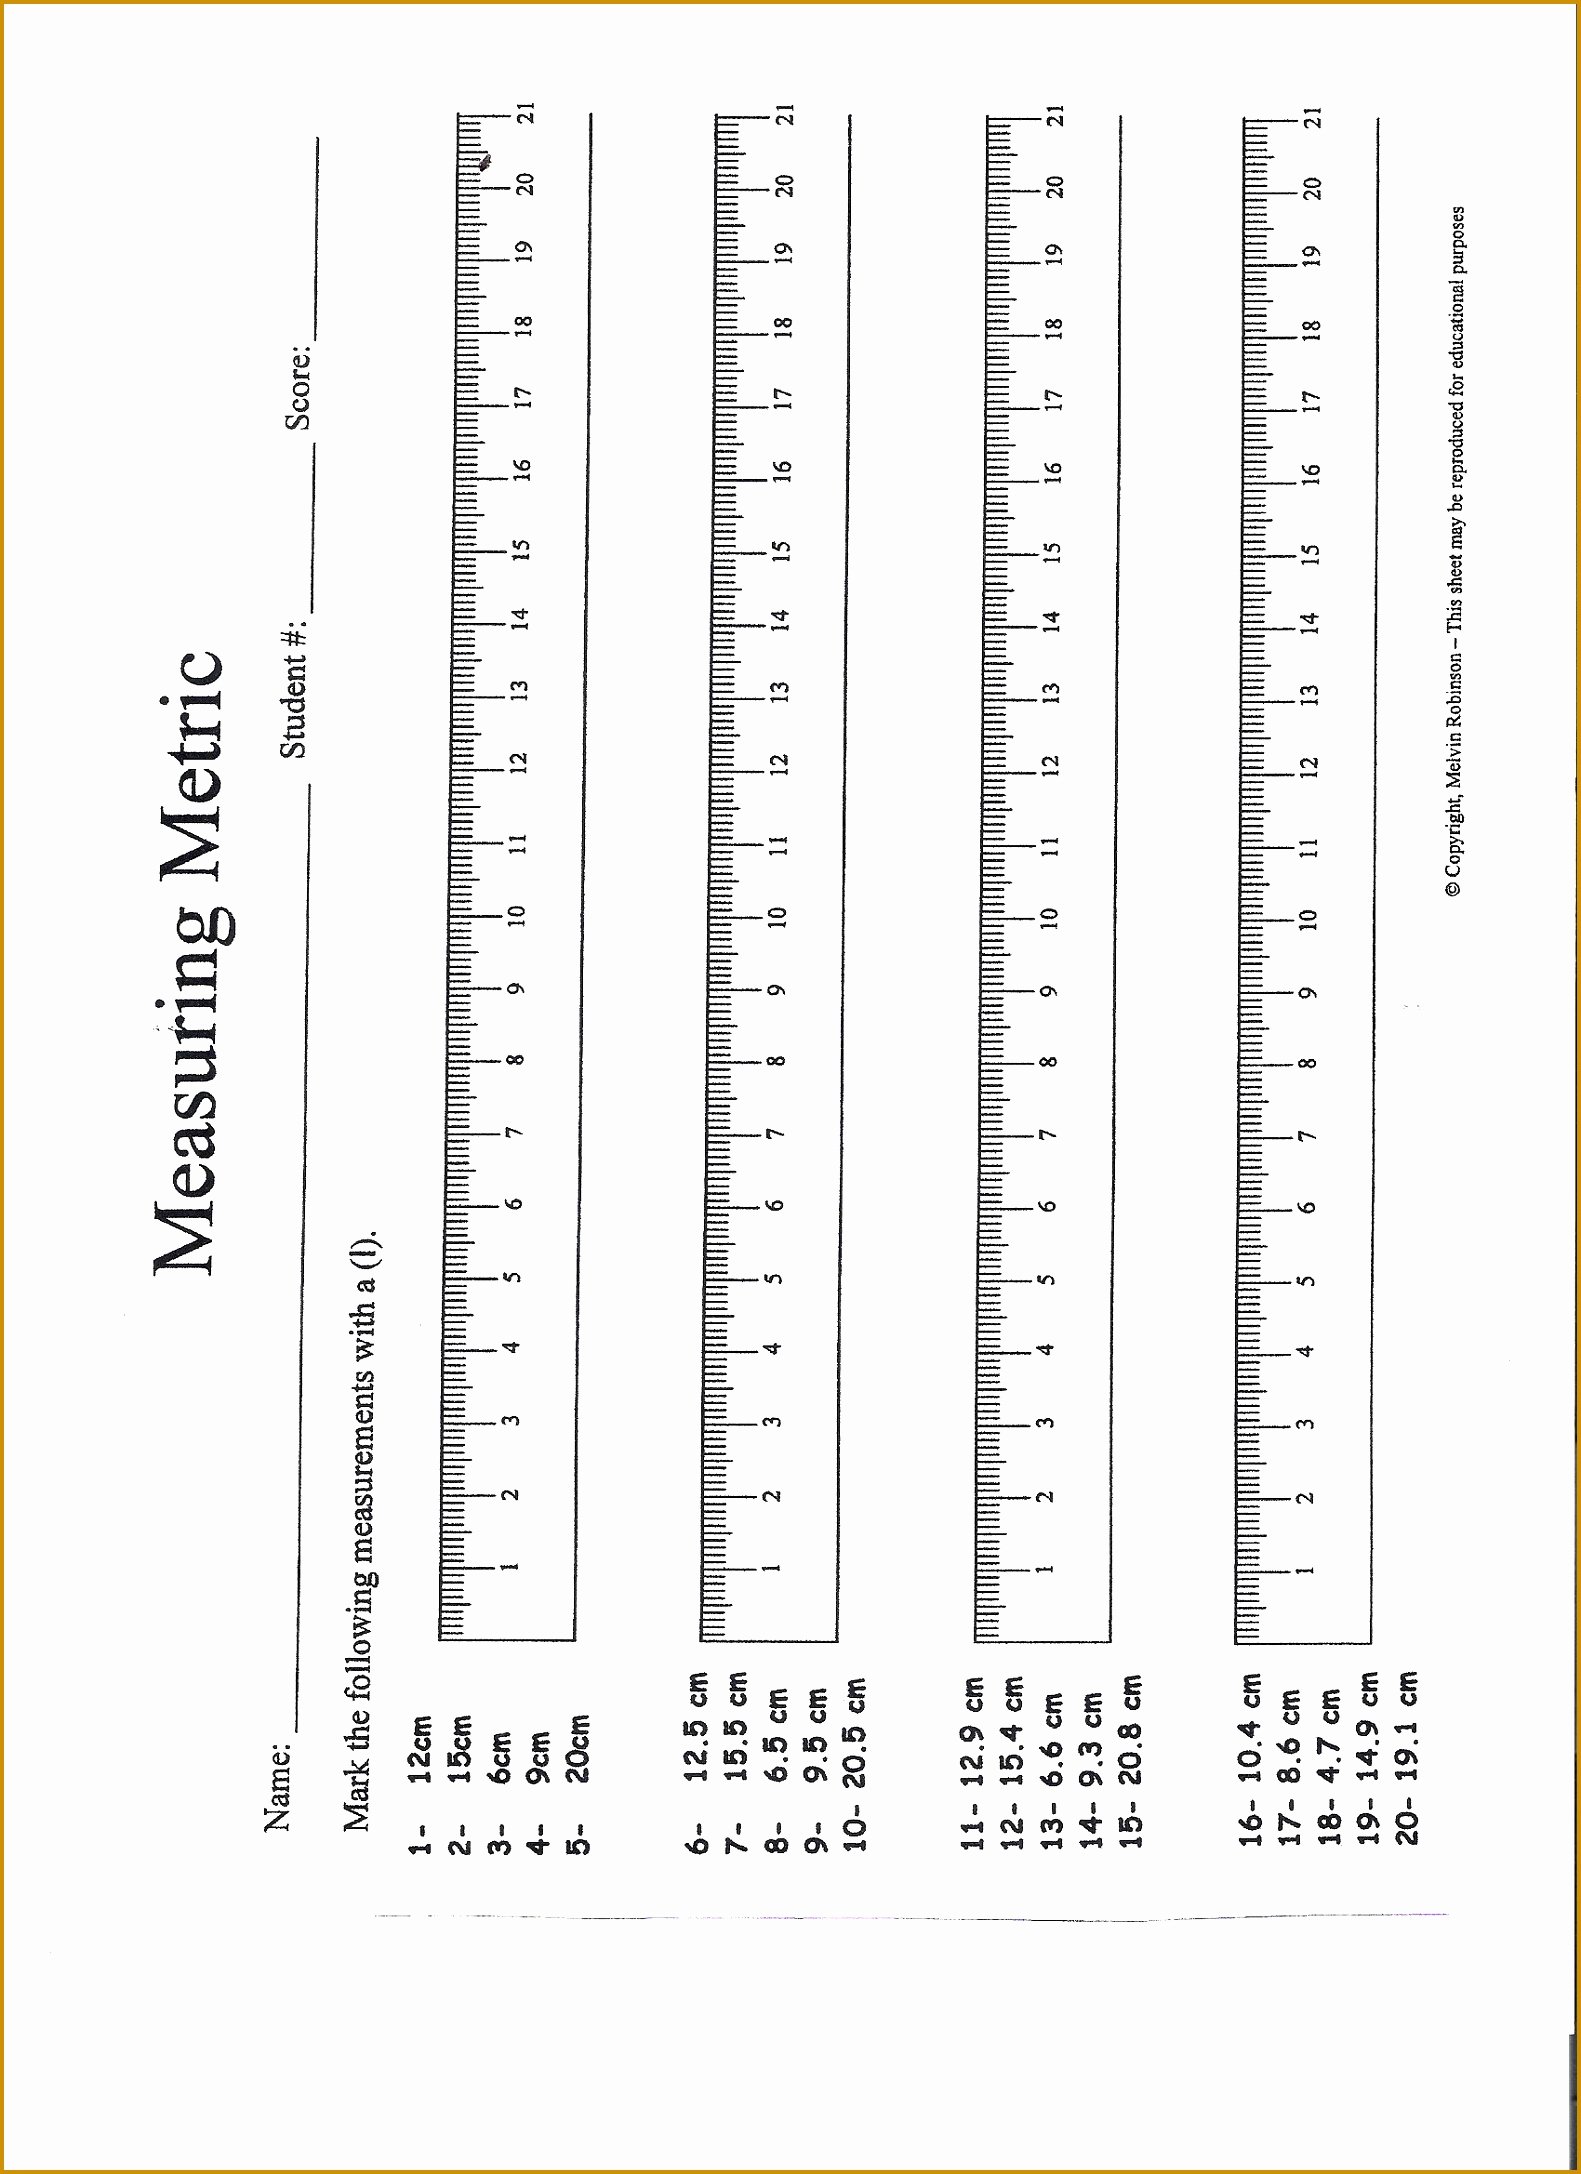 Metrics and Measurement Worksheet Answers Elegant 4 Metrics and Measurement Worksheet Answers